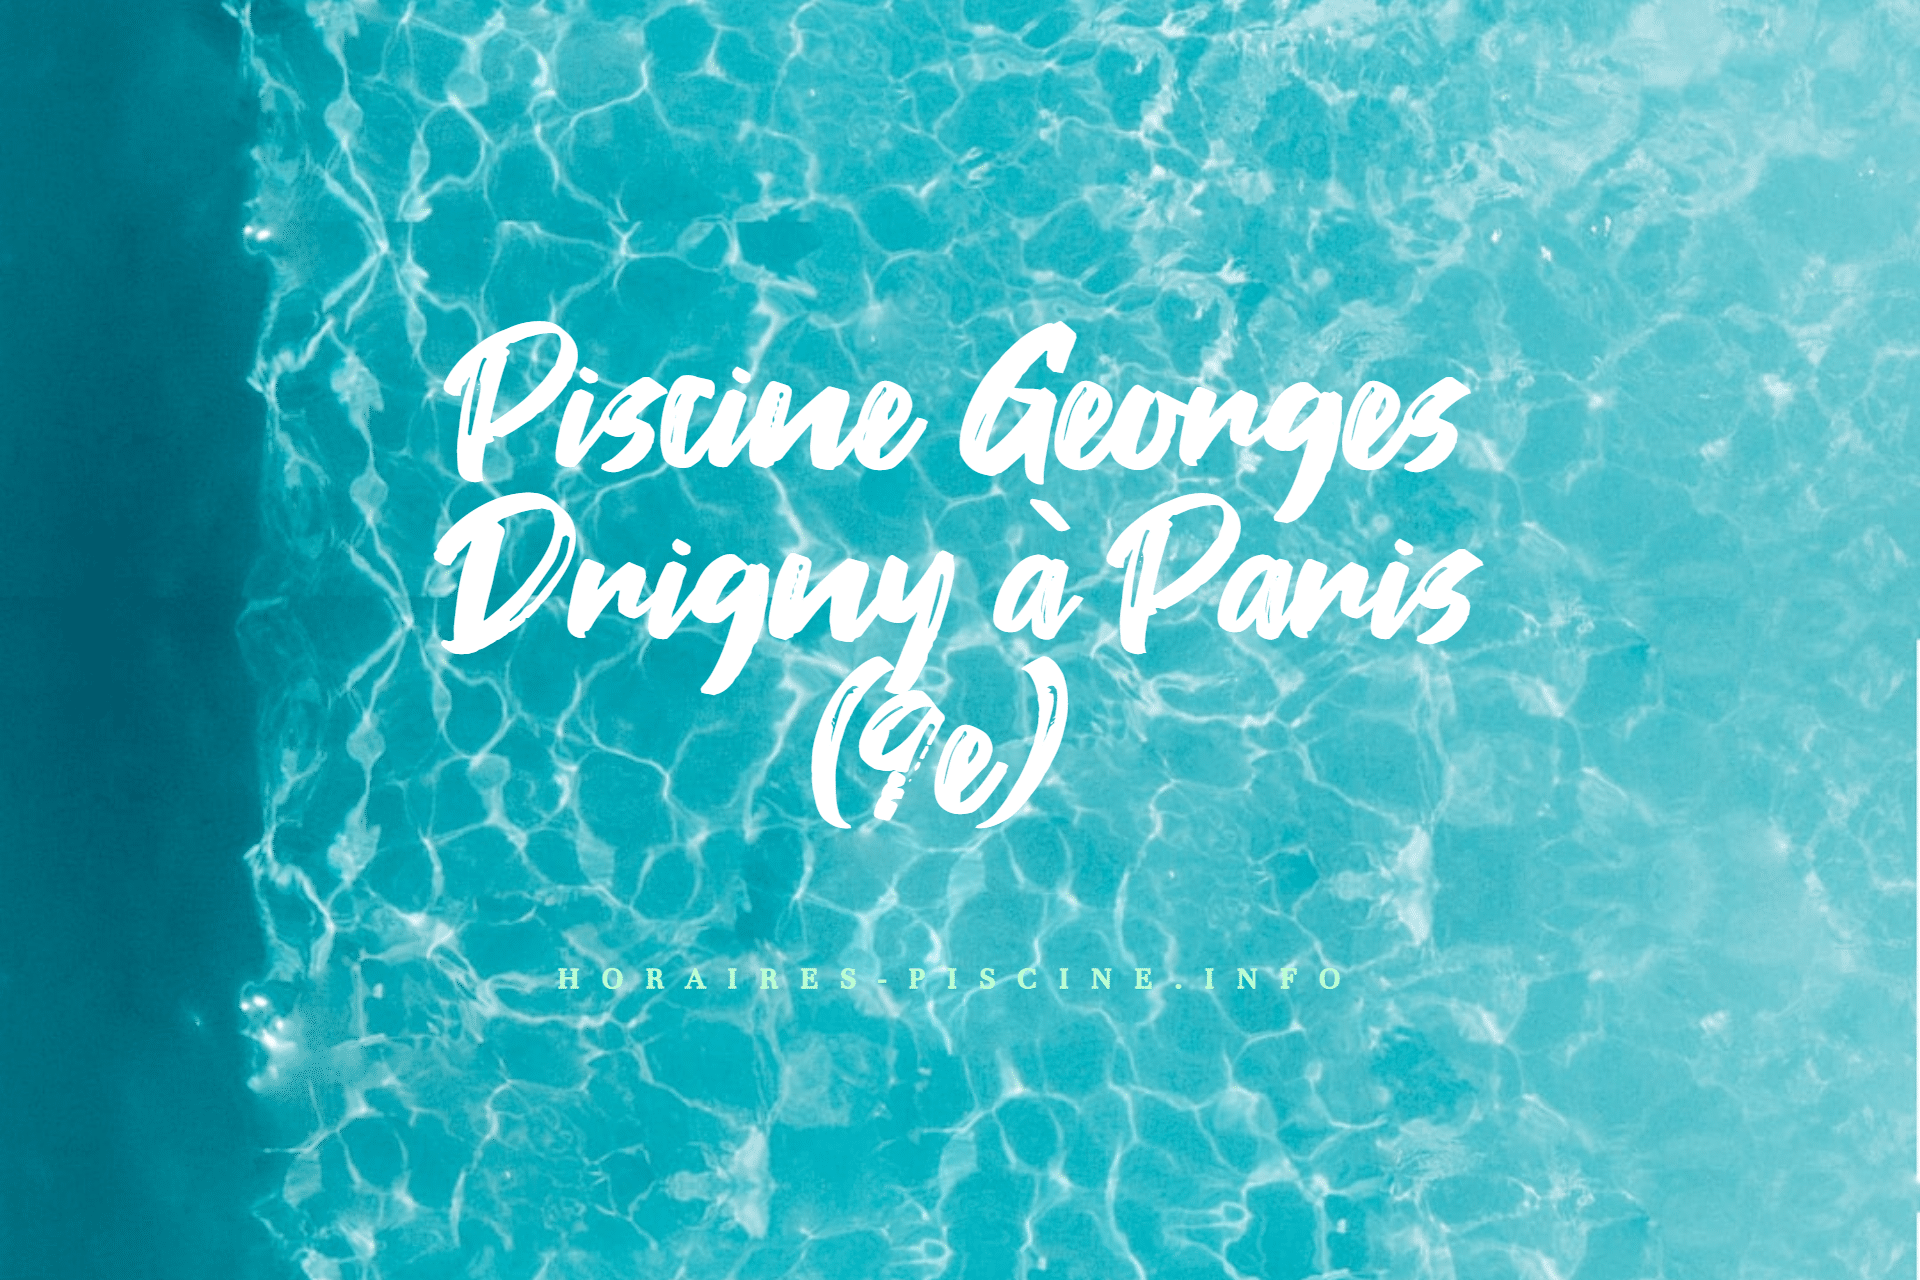 Piscine Georges Drigny à Paris (9e)